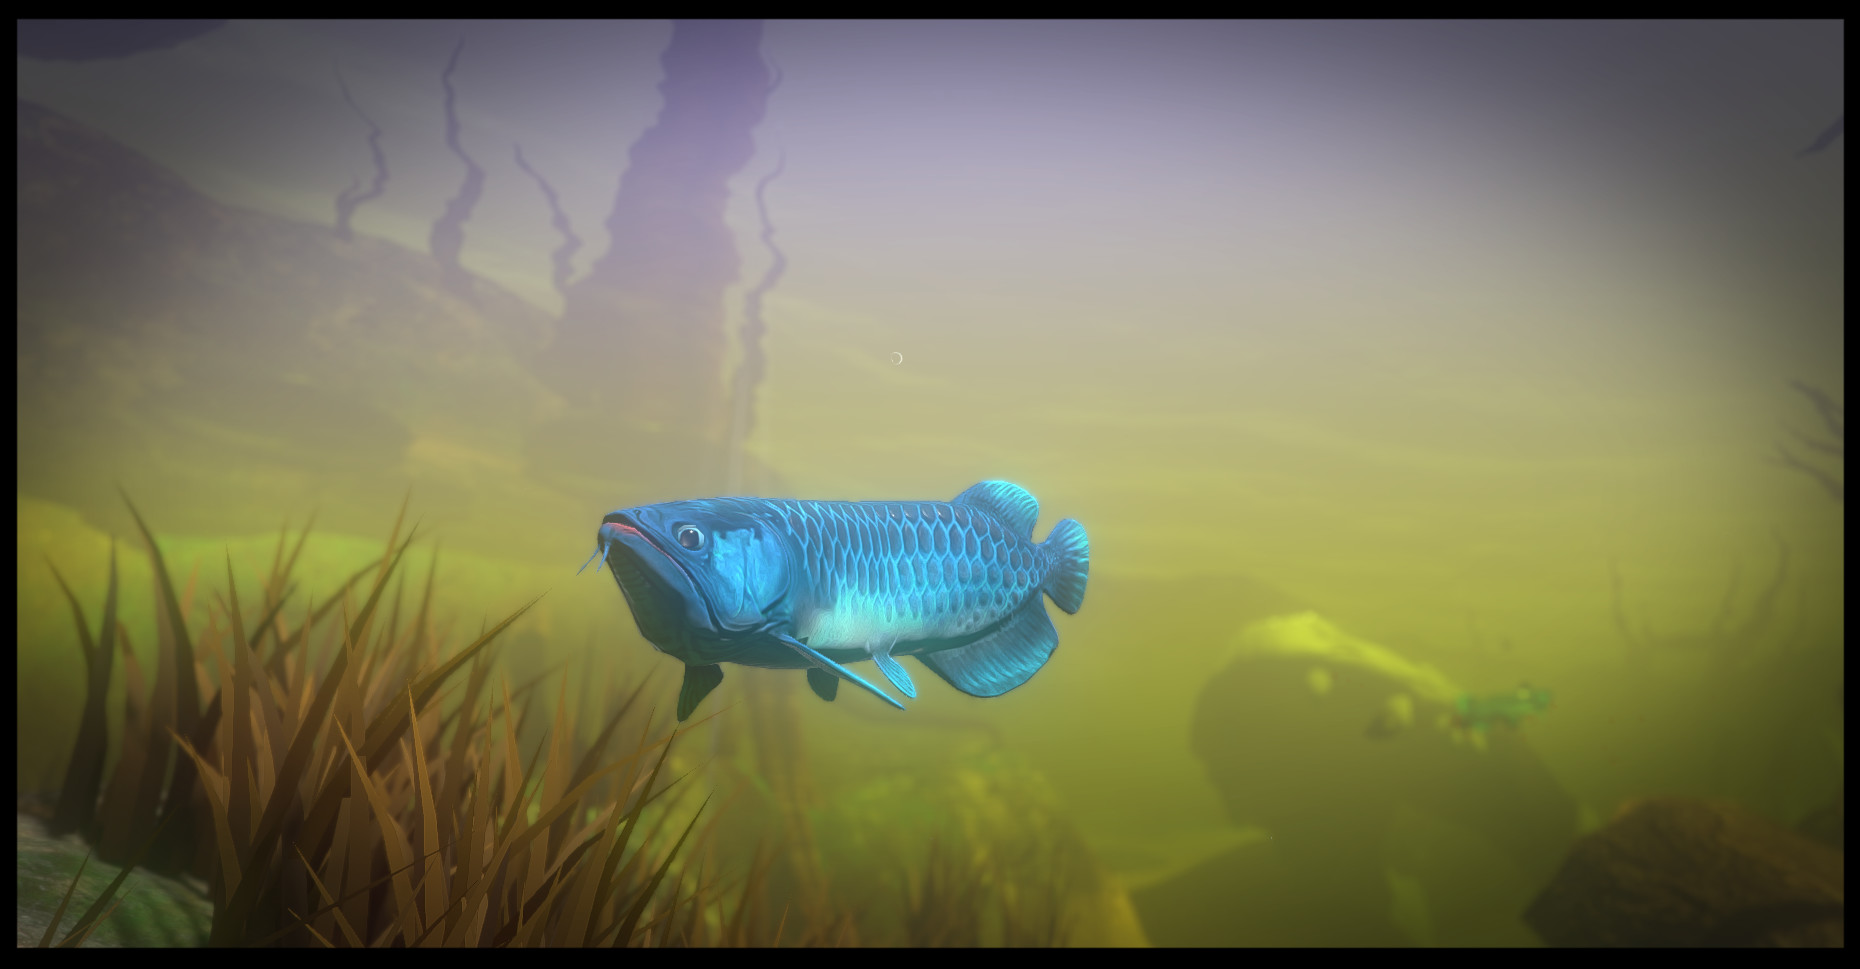 Feed And Grow Fish PC Version Full Game Free Download - Gaming Debates